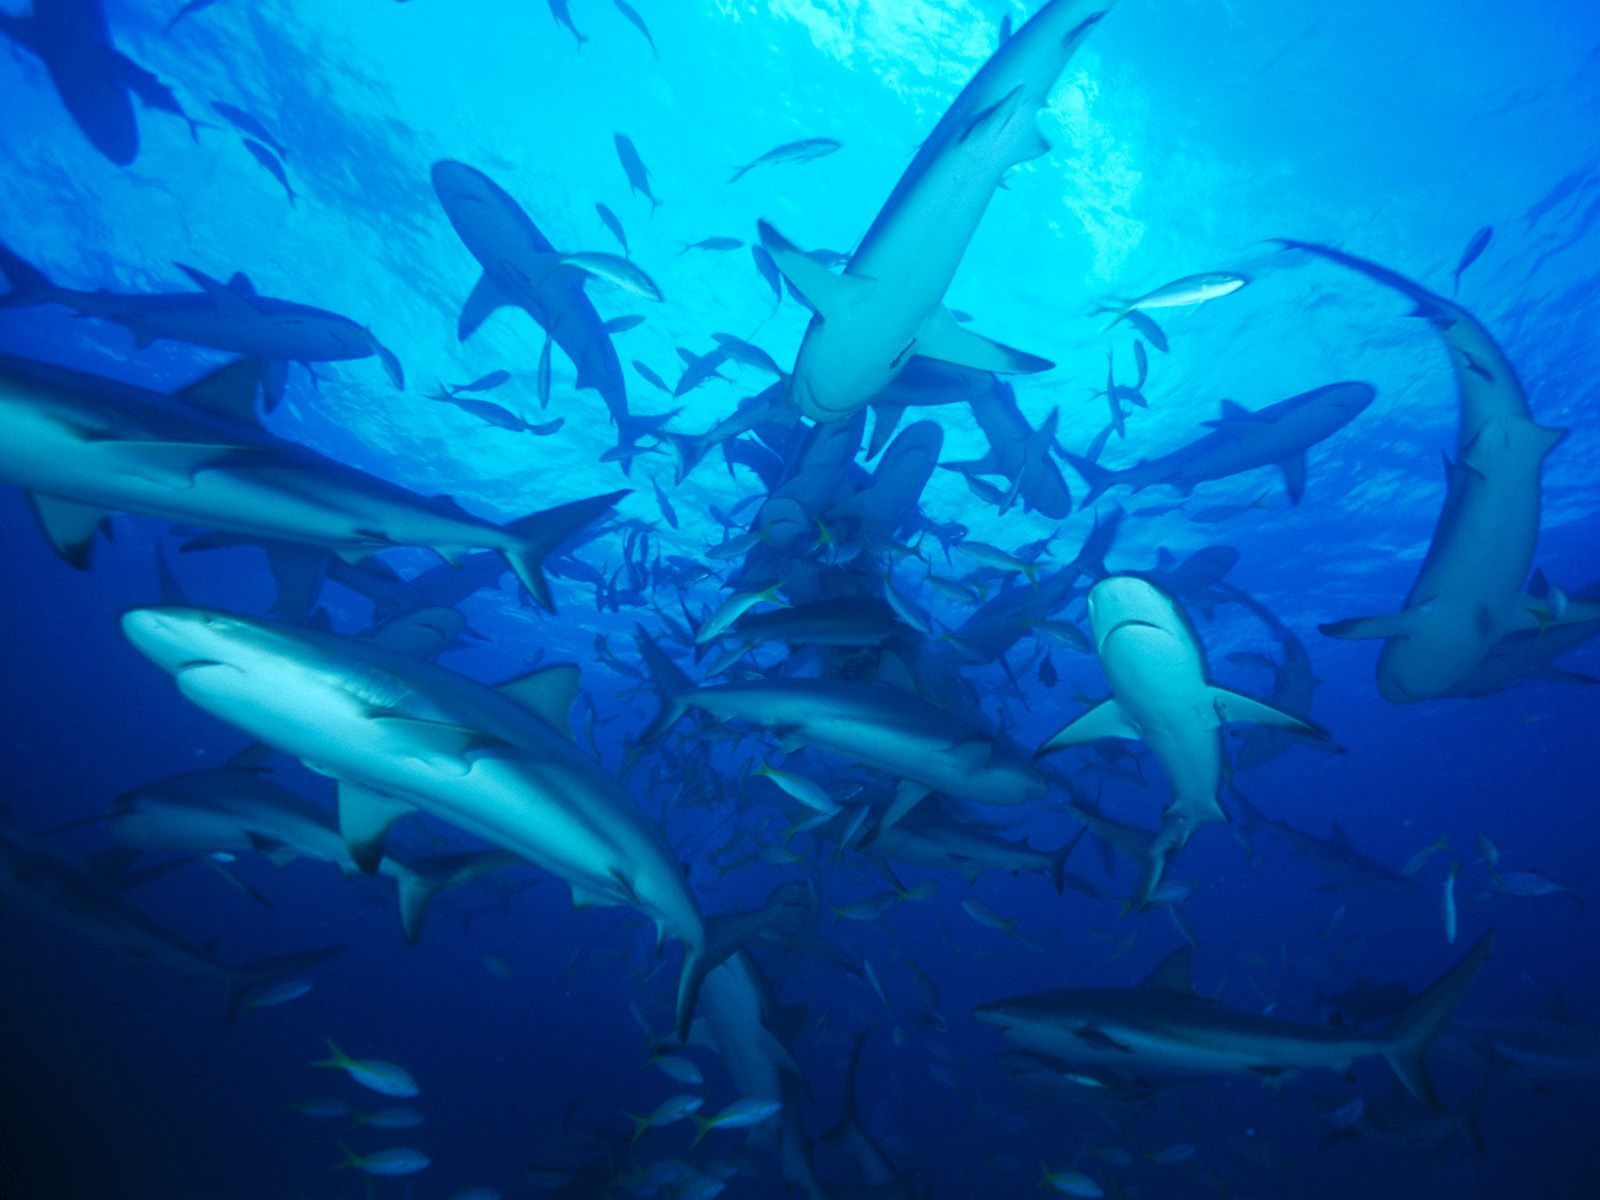 Bahamas ocean sharks underwater wallpaper - (#182062) - High ...